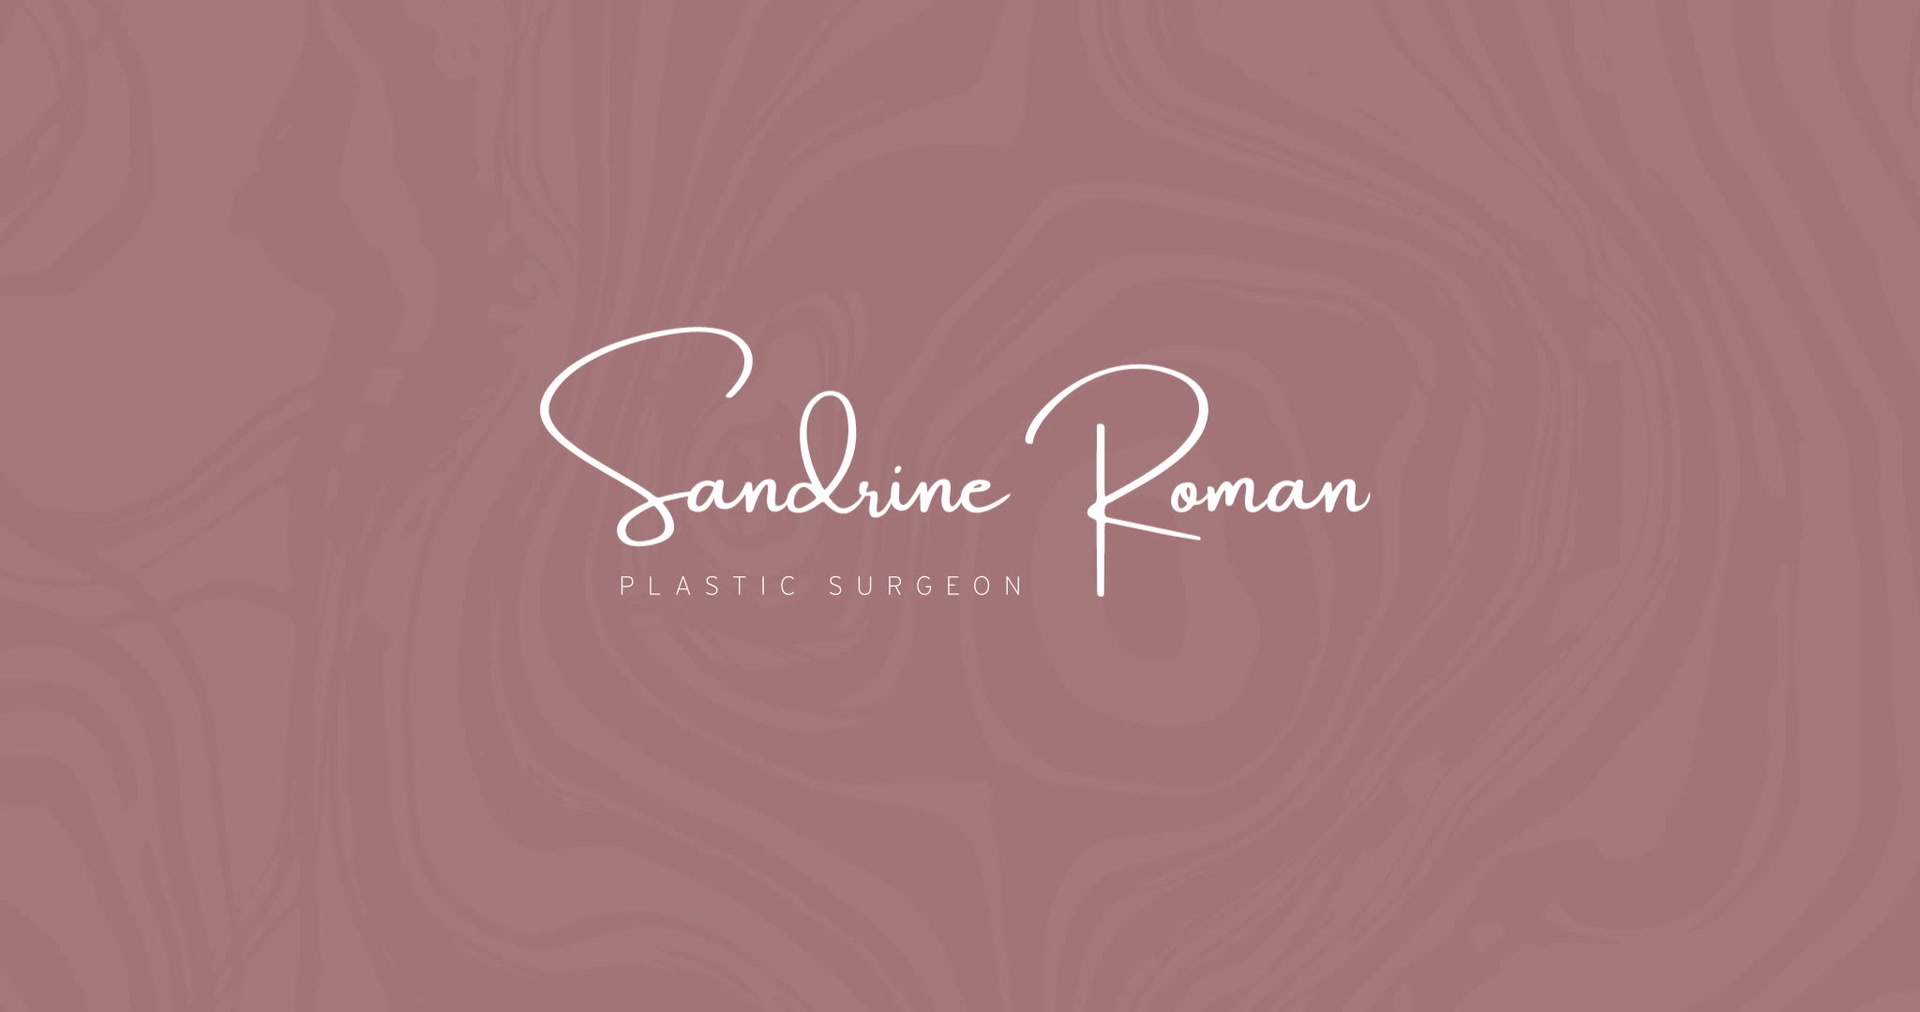 Dr Sandrine Roman